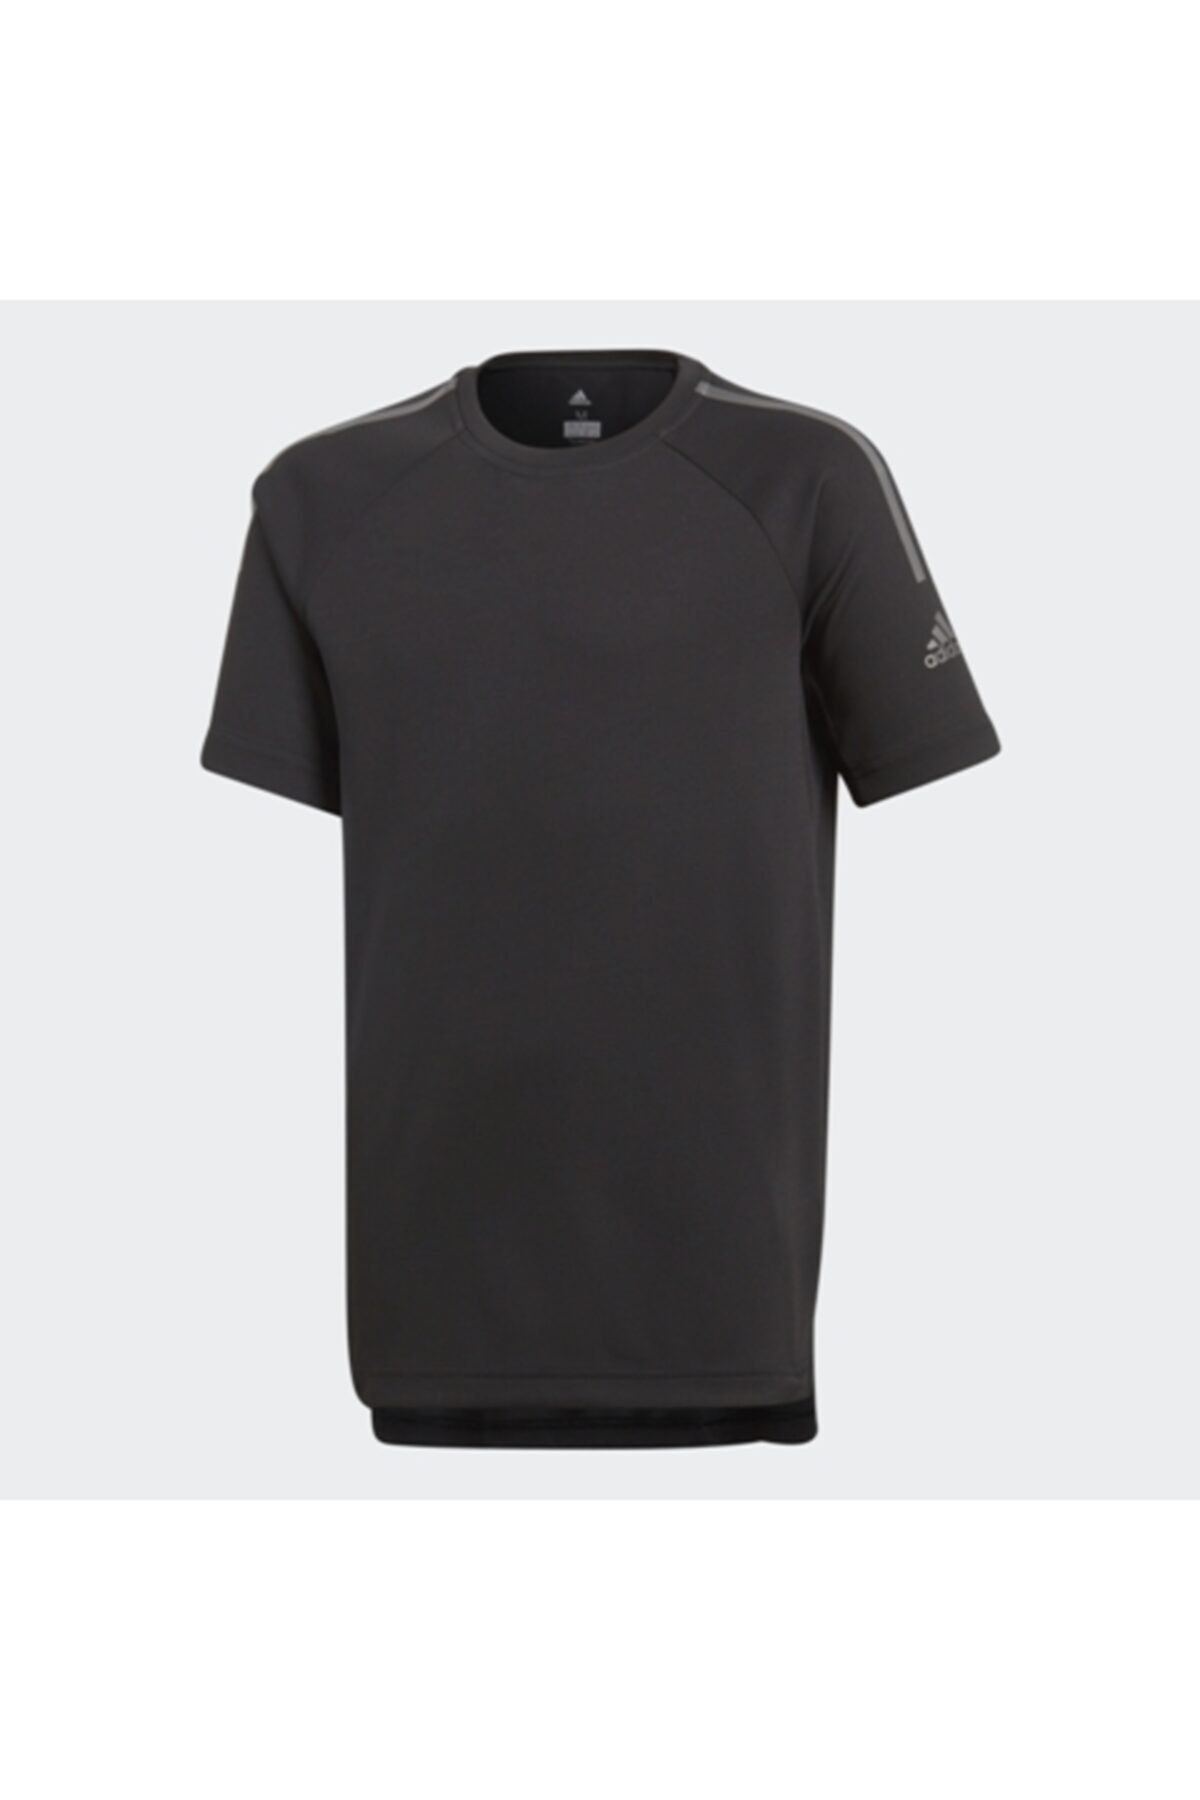 adidas YB TR COOL TEE Siyah Erkek Çocuk T-Shirt 100576205